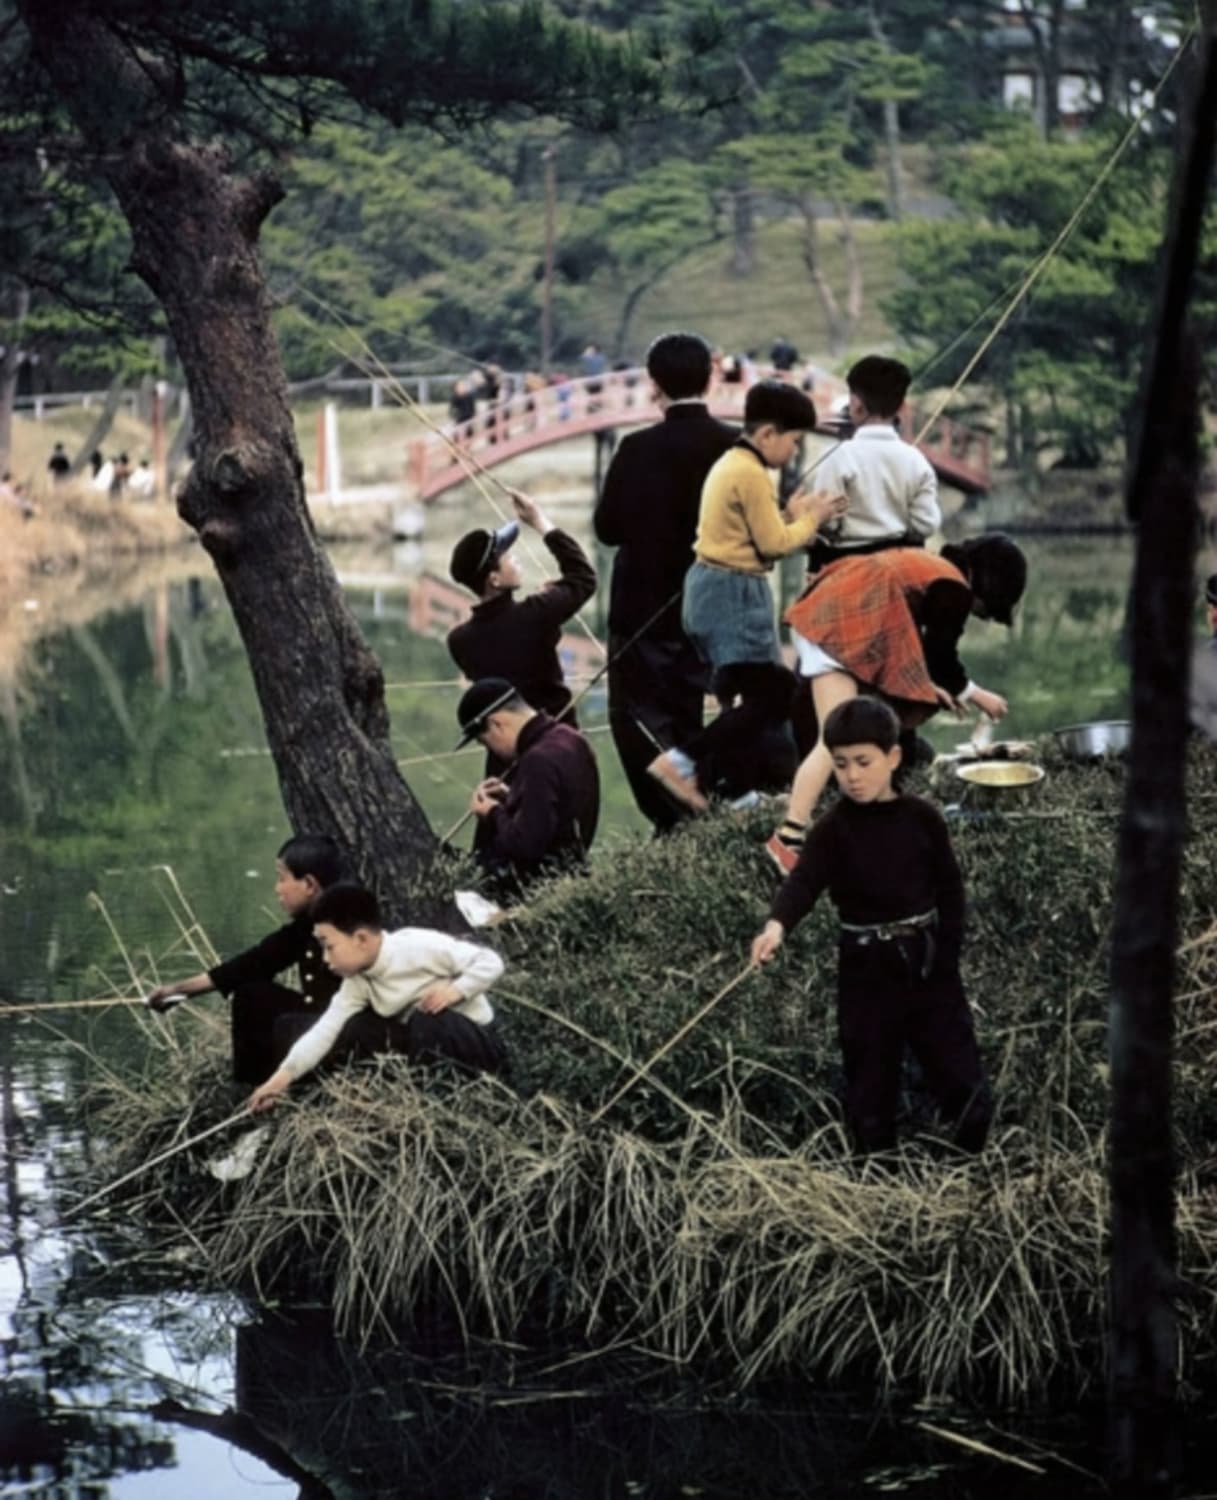 Children fishing in Tokyo, Japan, 1960. Photo by Elliott Erwitt